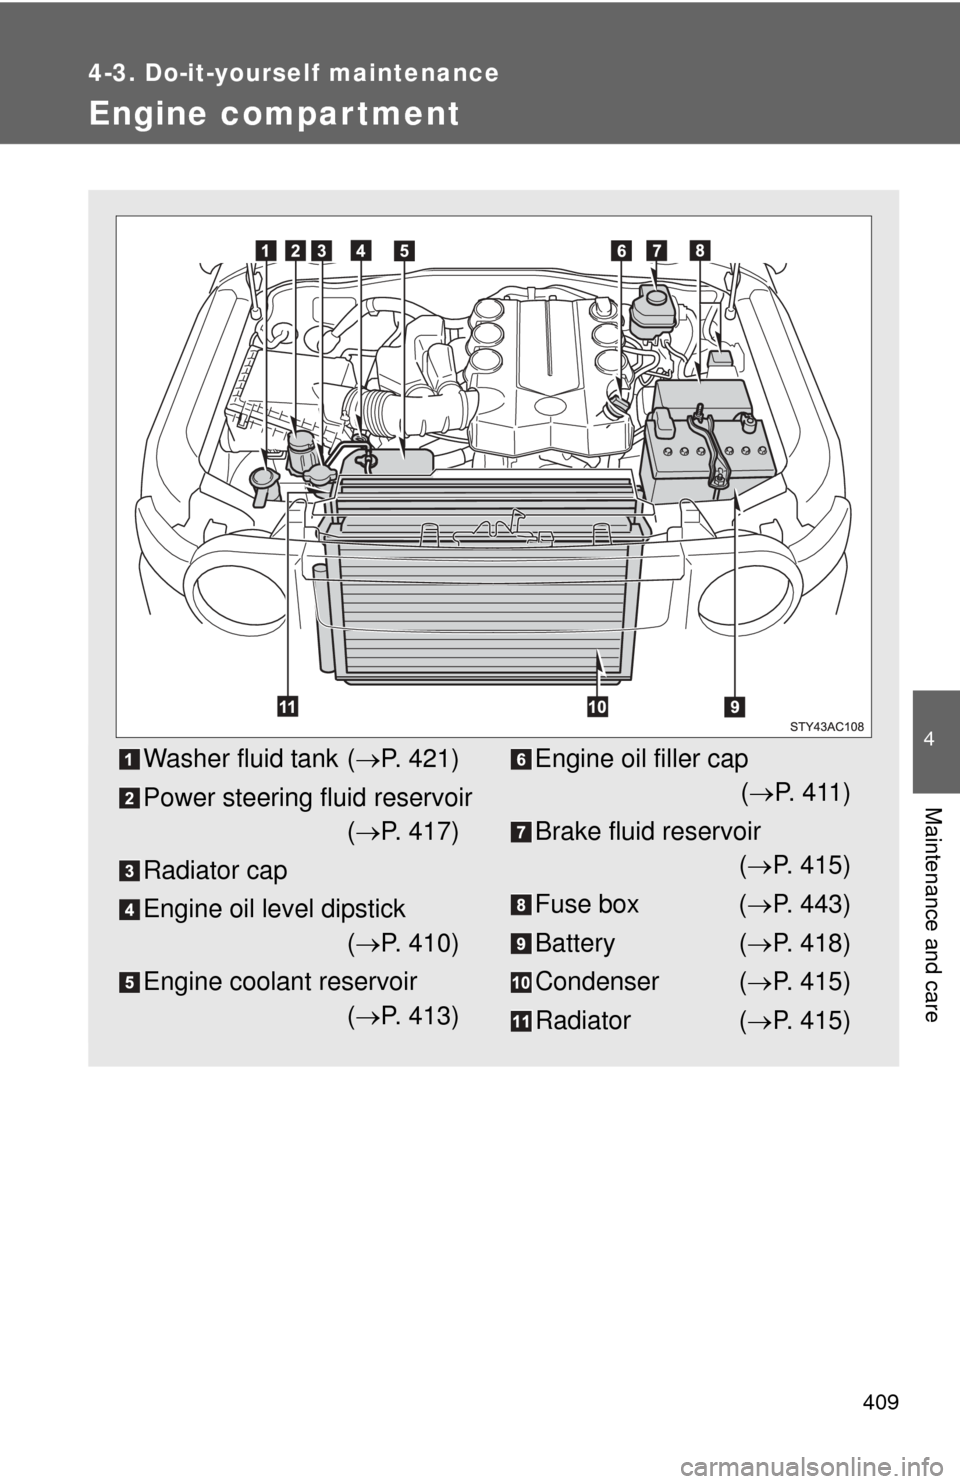 TOYOTA FJ CRUISER 2013 1.G Owners Manual 409
4-3. Do-it-yourself maintenance
4
Maintenance and care
Engine compar tment
Washer fluid tank (P. 421)
Power steering fluid reservoir ( P. 417)
Radiator cap
Engine oil level dipstick ( P. 